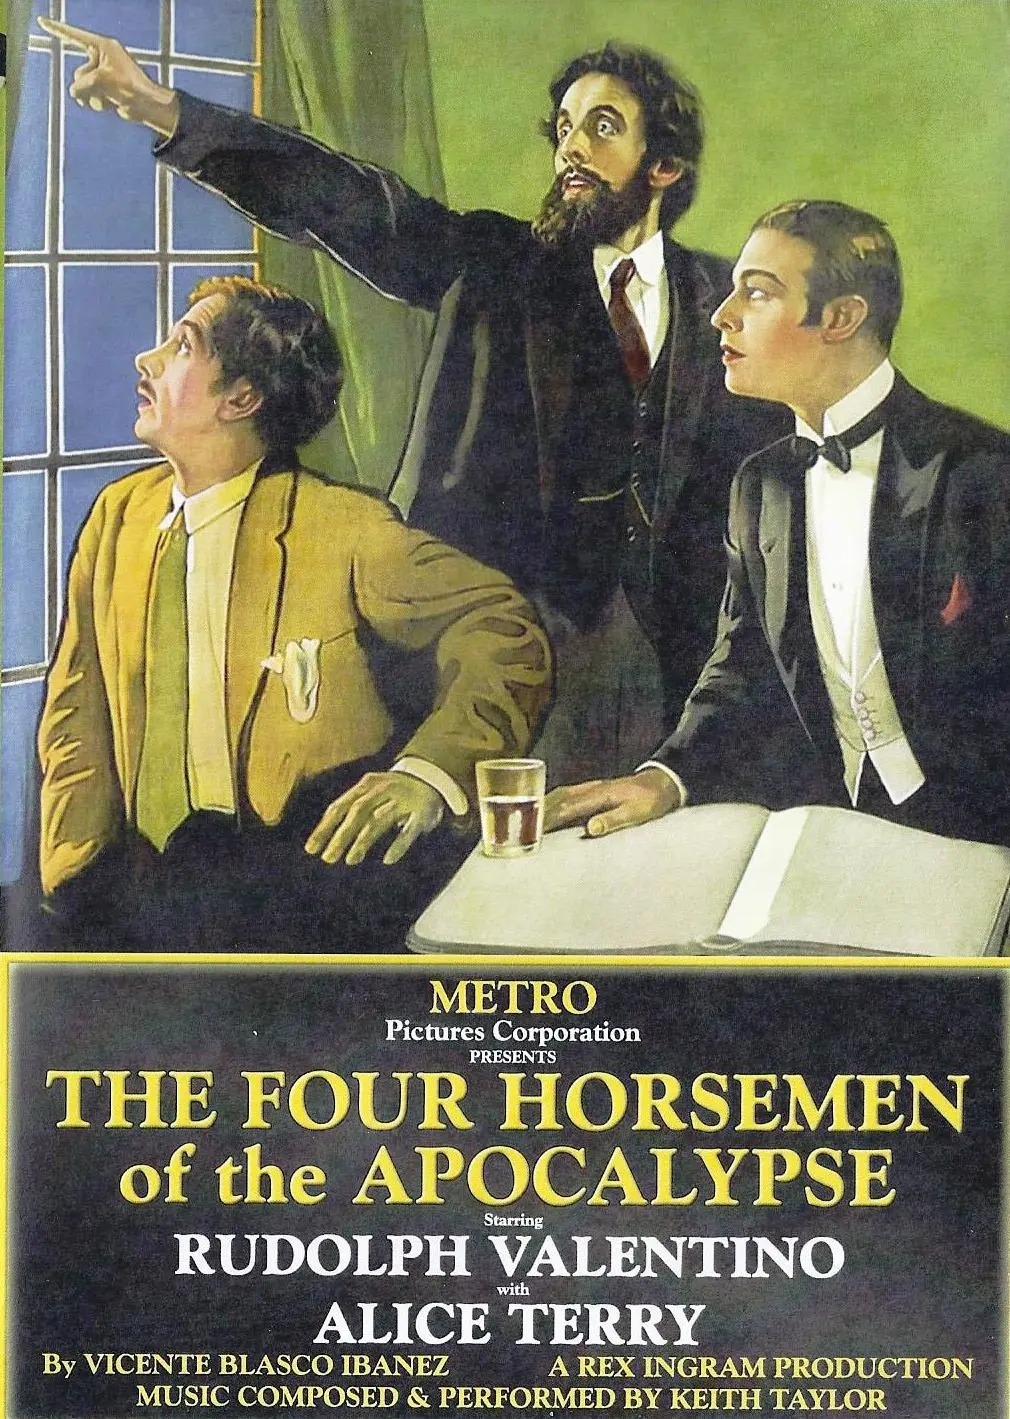 The Four Horsemen of the Apocalypse Silent Movie